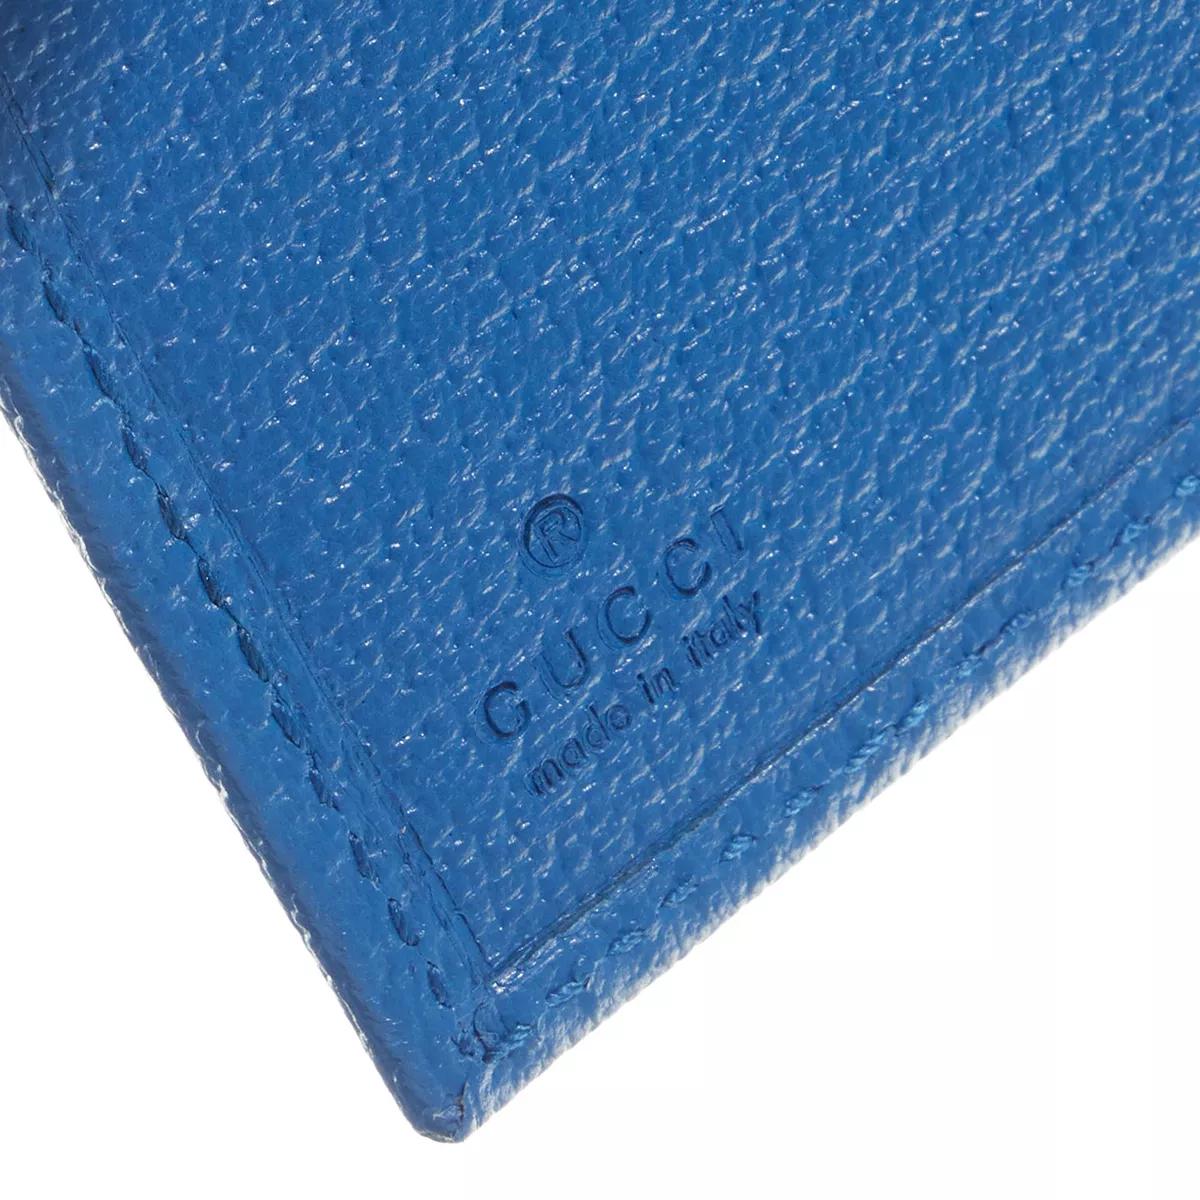 Shop GUCCI Canvas Plain Leather Folding Wallet Logo Outlet by Smartlondon